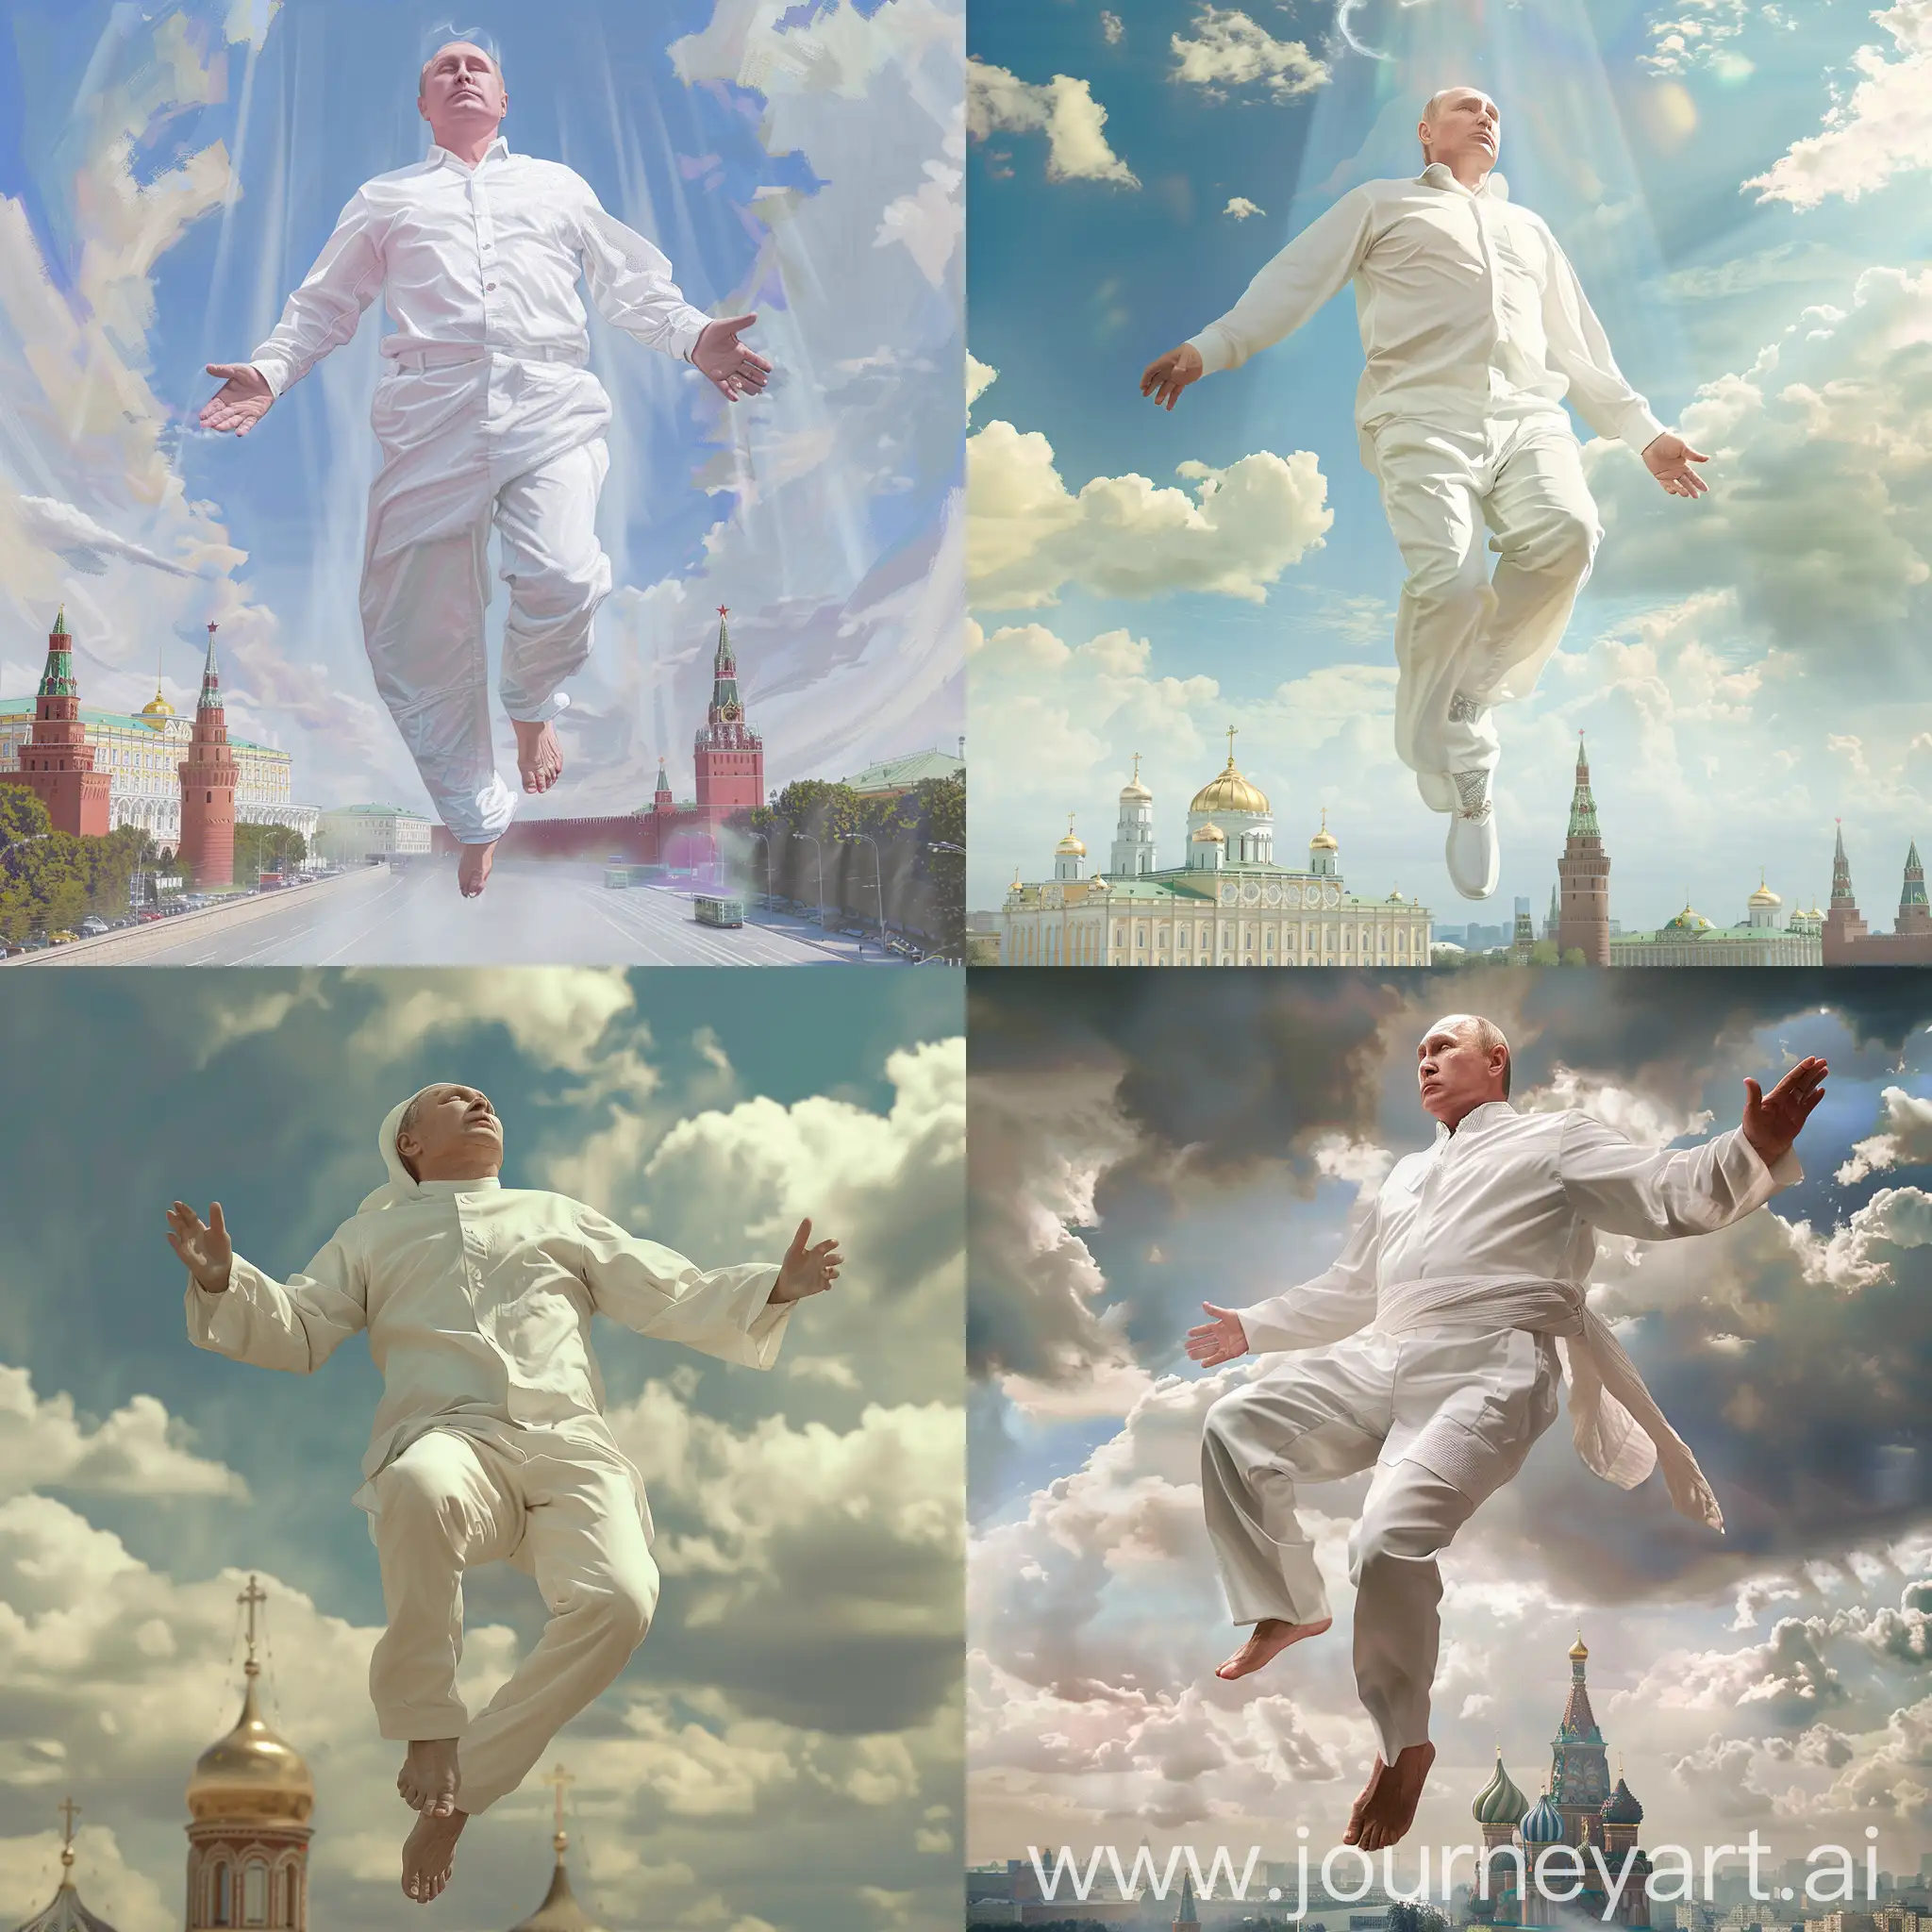 Vladimir-Putin-in-Divine-White-Attire-Ascends-Amid-Moscows-Iconic-Skyline